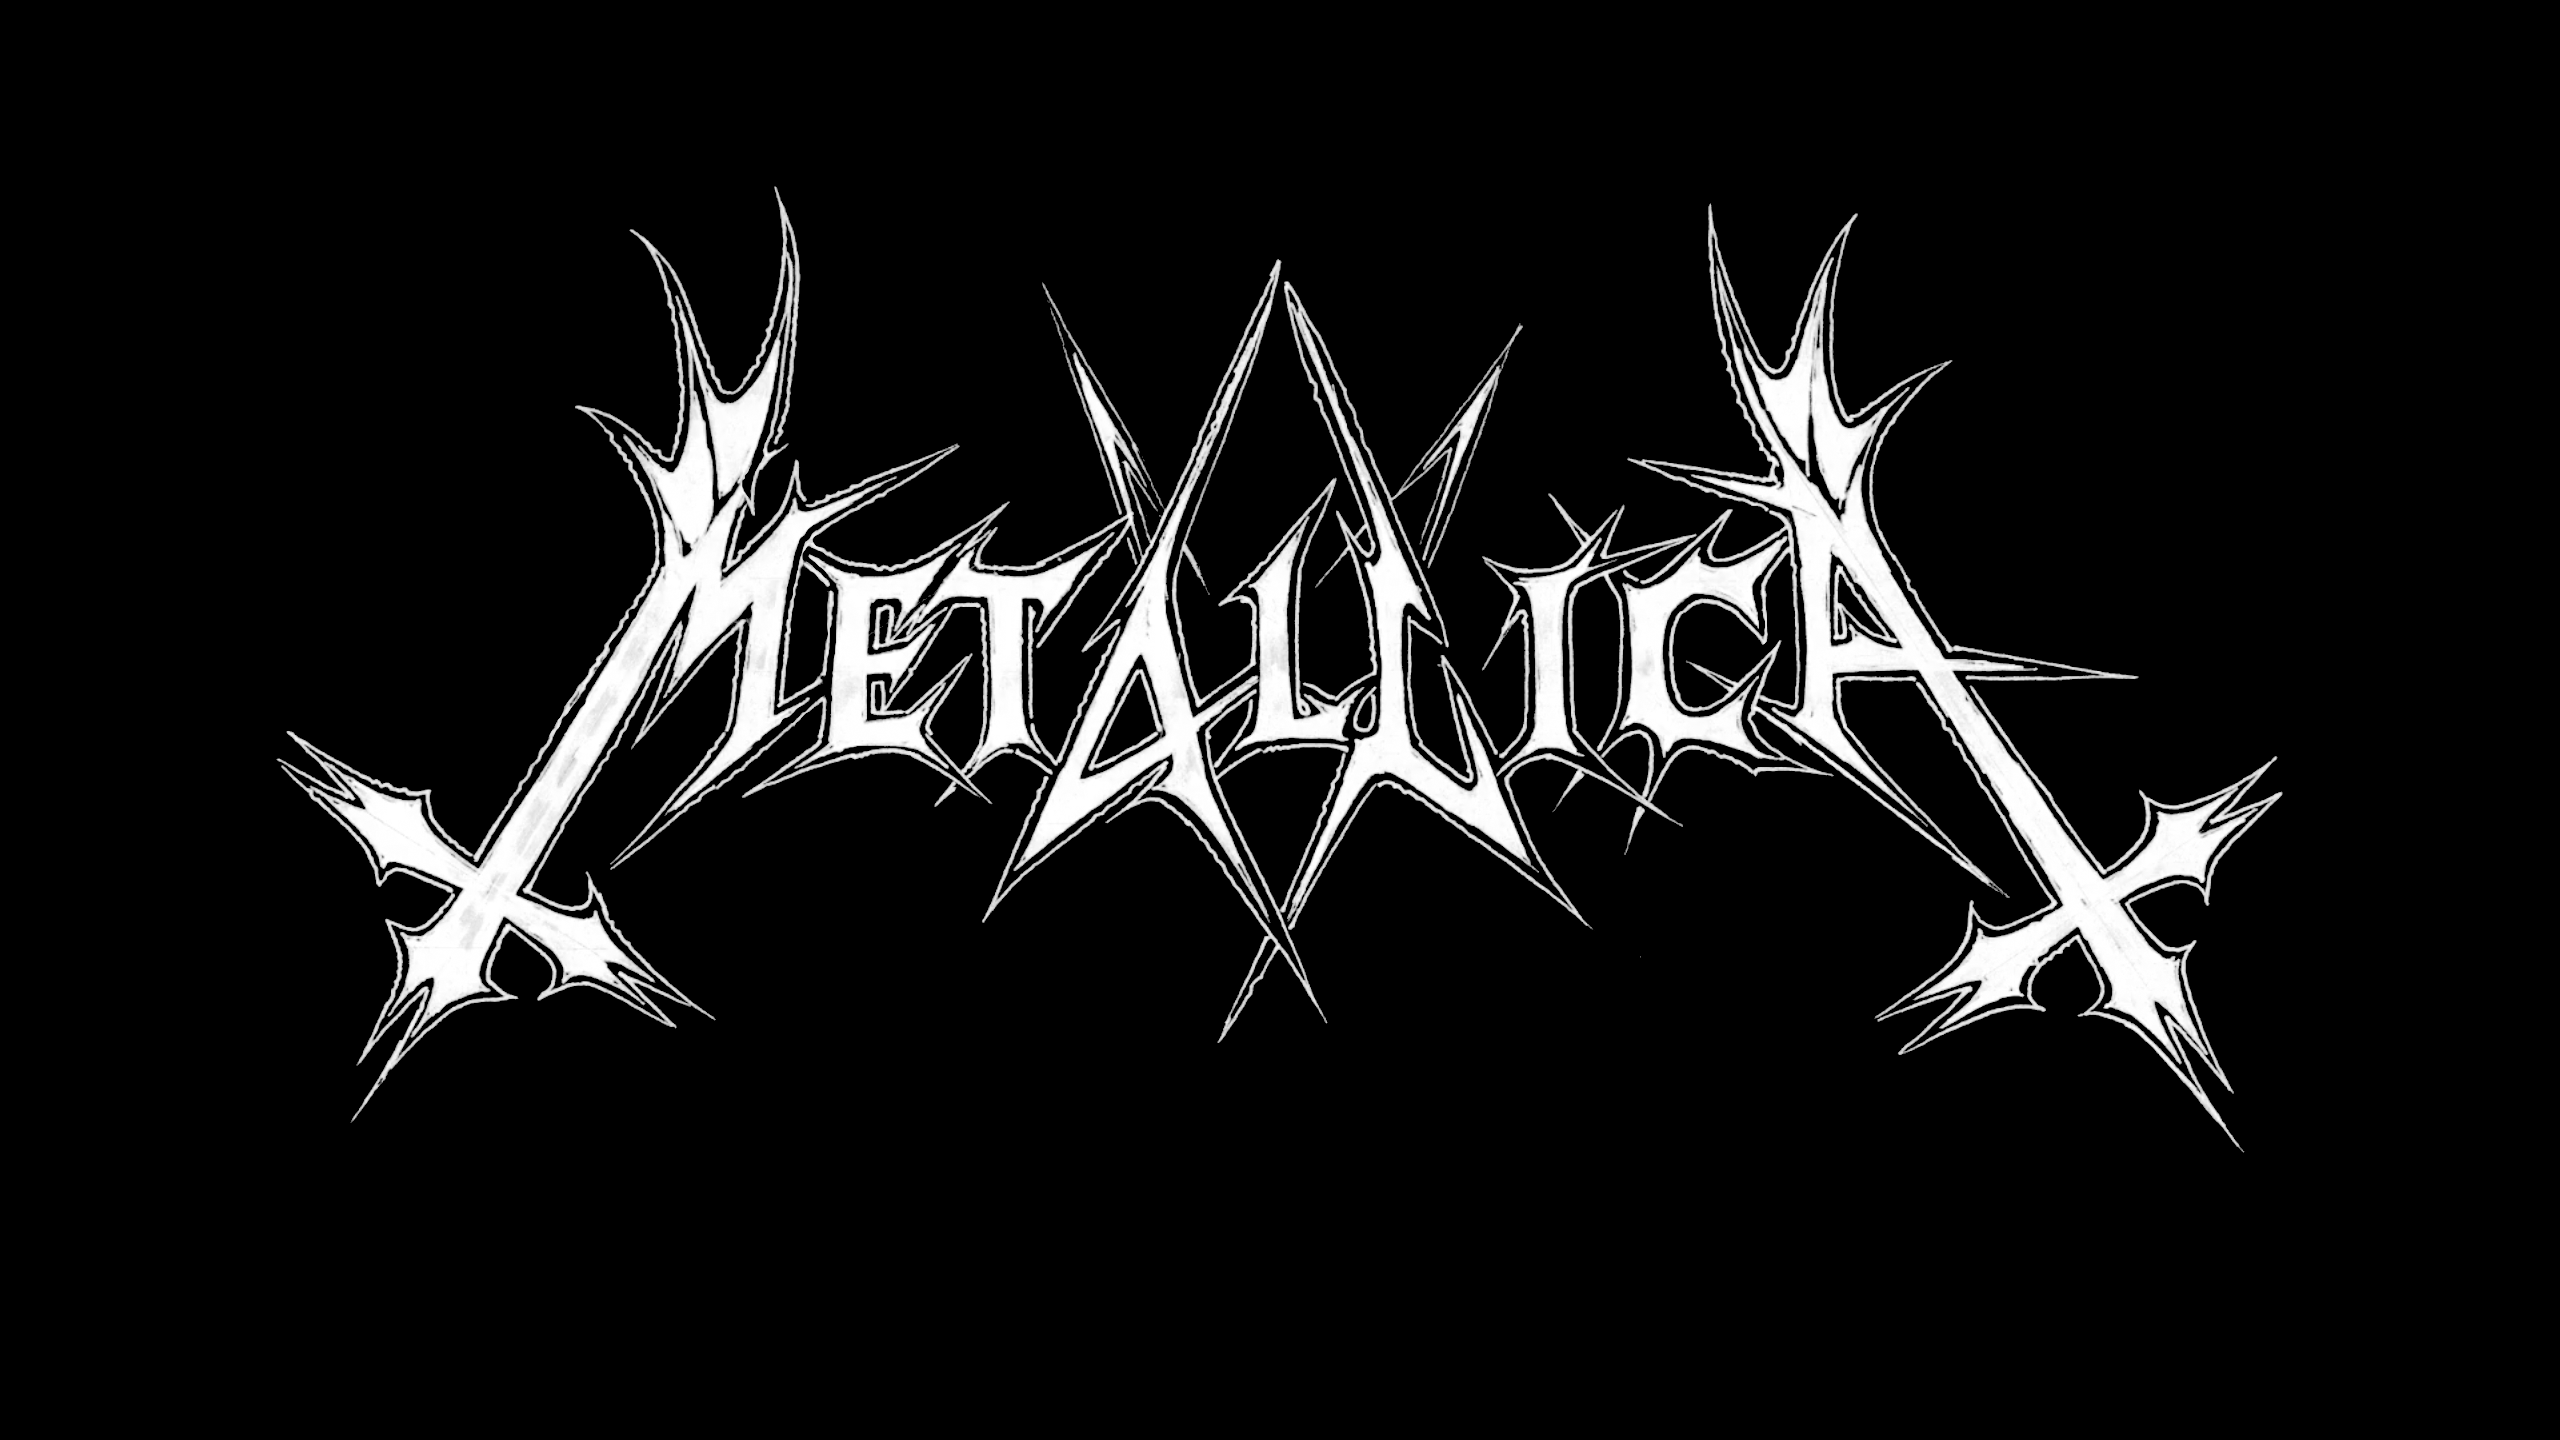 Metallica Logo - Metallica Mayhem logo - extracted from ManUNkind video : Metallica